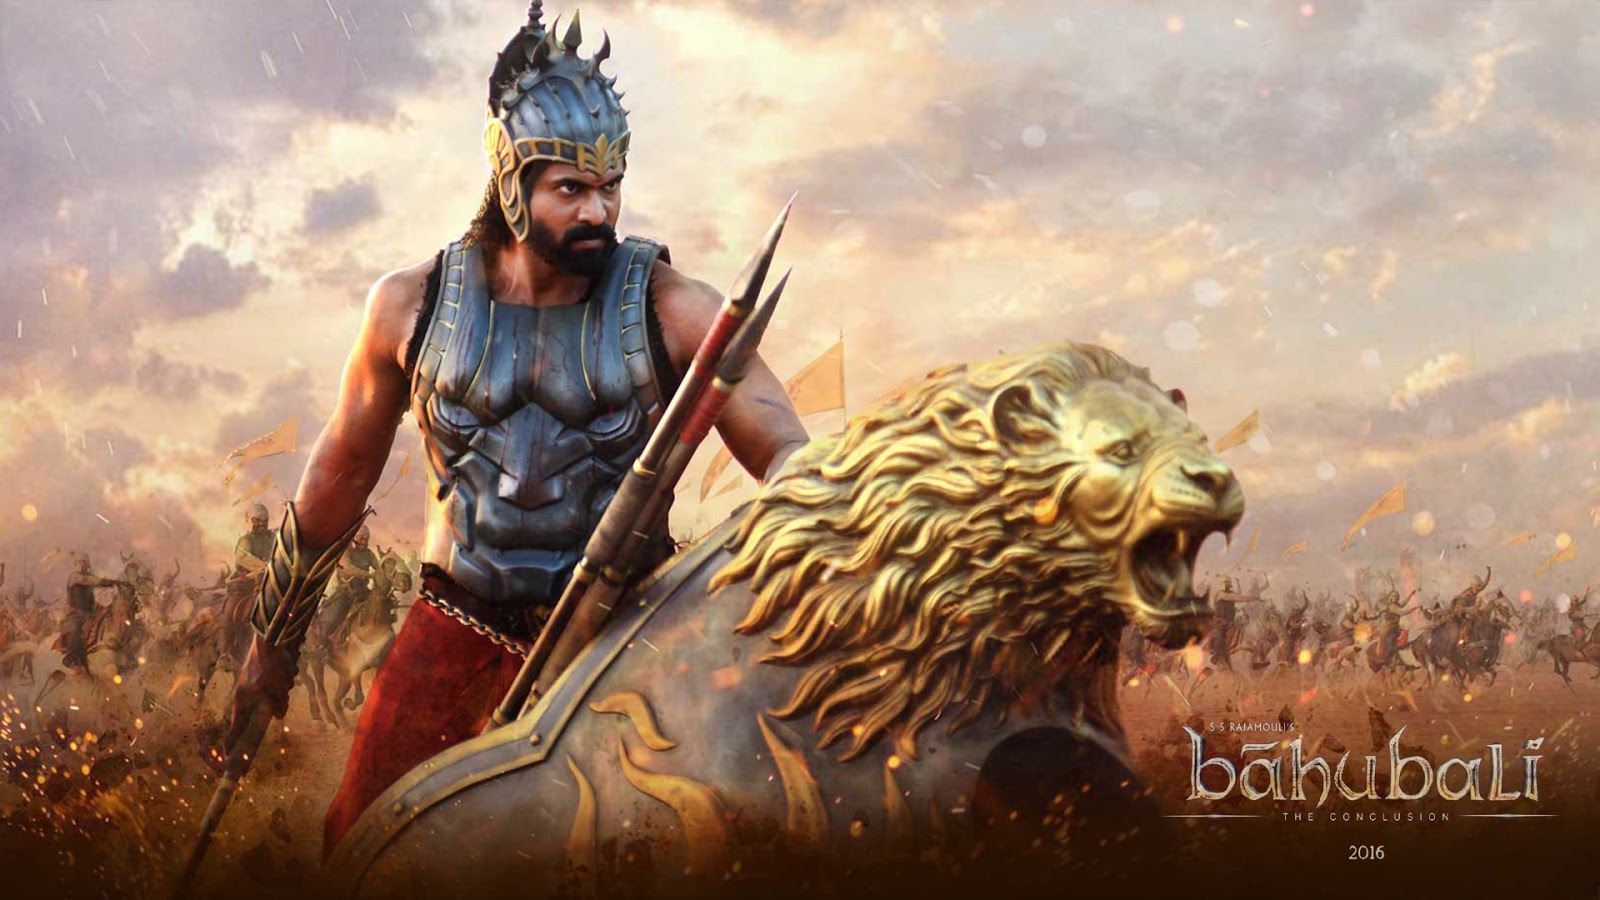 bahubali 2 wallpaper,mythology,strategy video game,cg artwork,warlord,conquistador